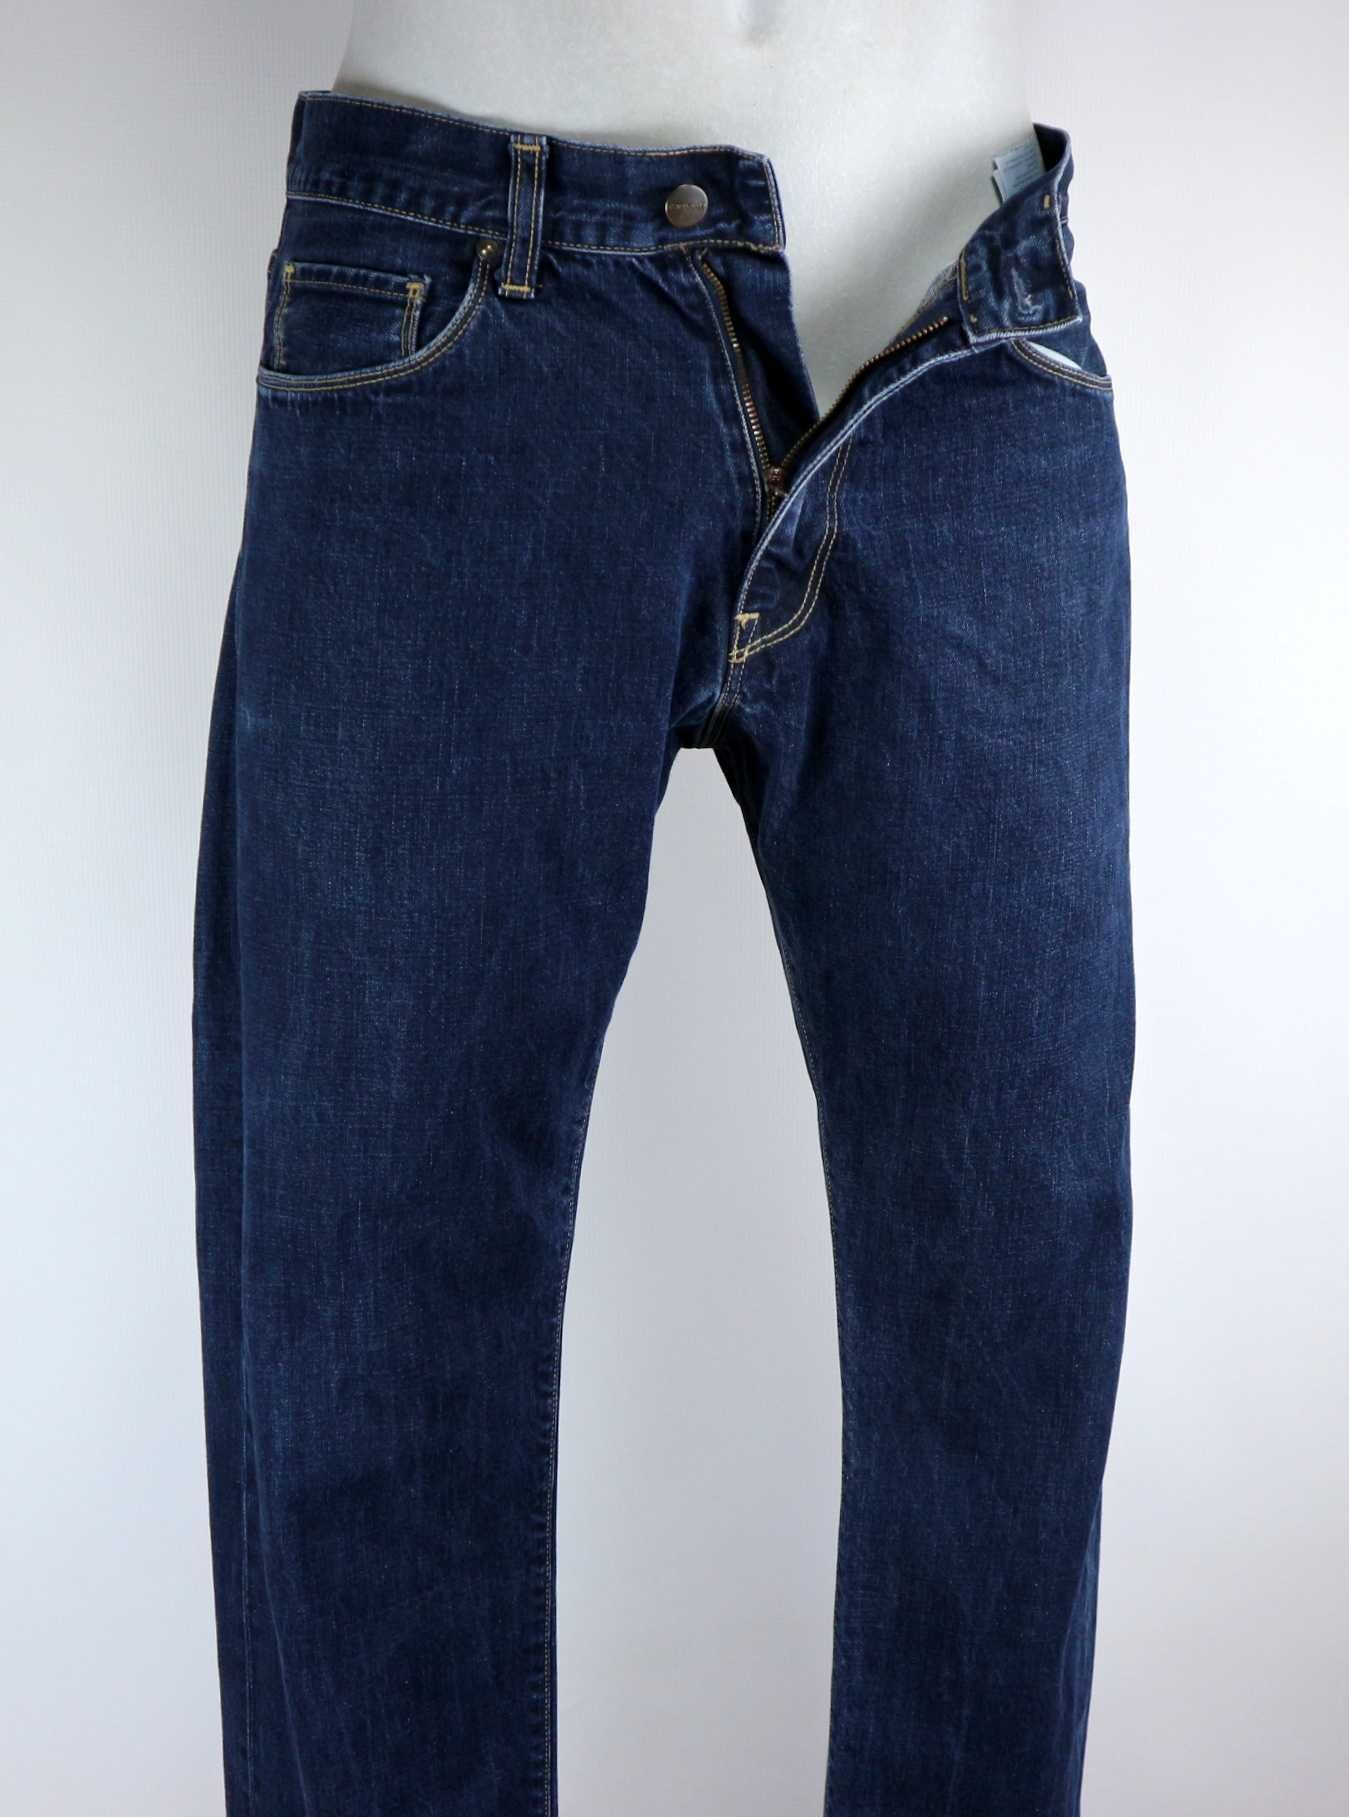 Carhartt Vinton spodnie jeansy W34 L34 pas 2 x 44 cm